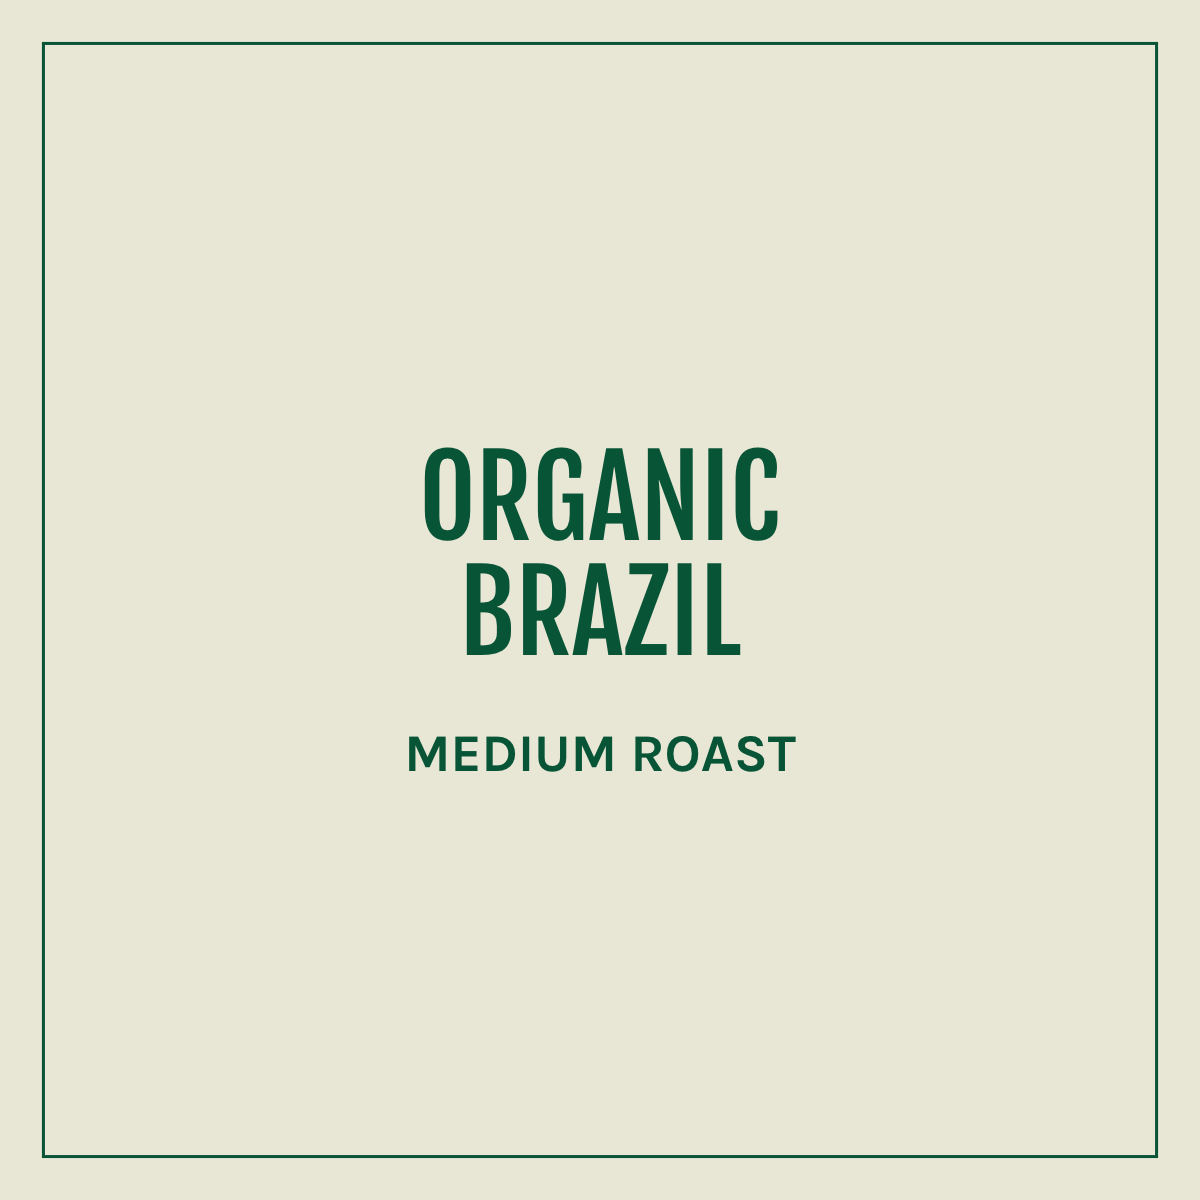 Organic Brazil Medium Roast